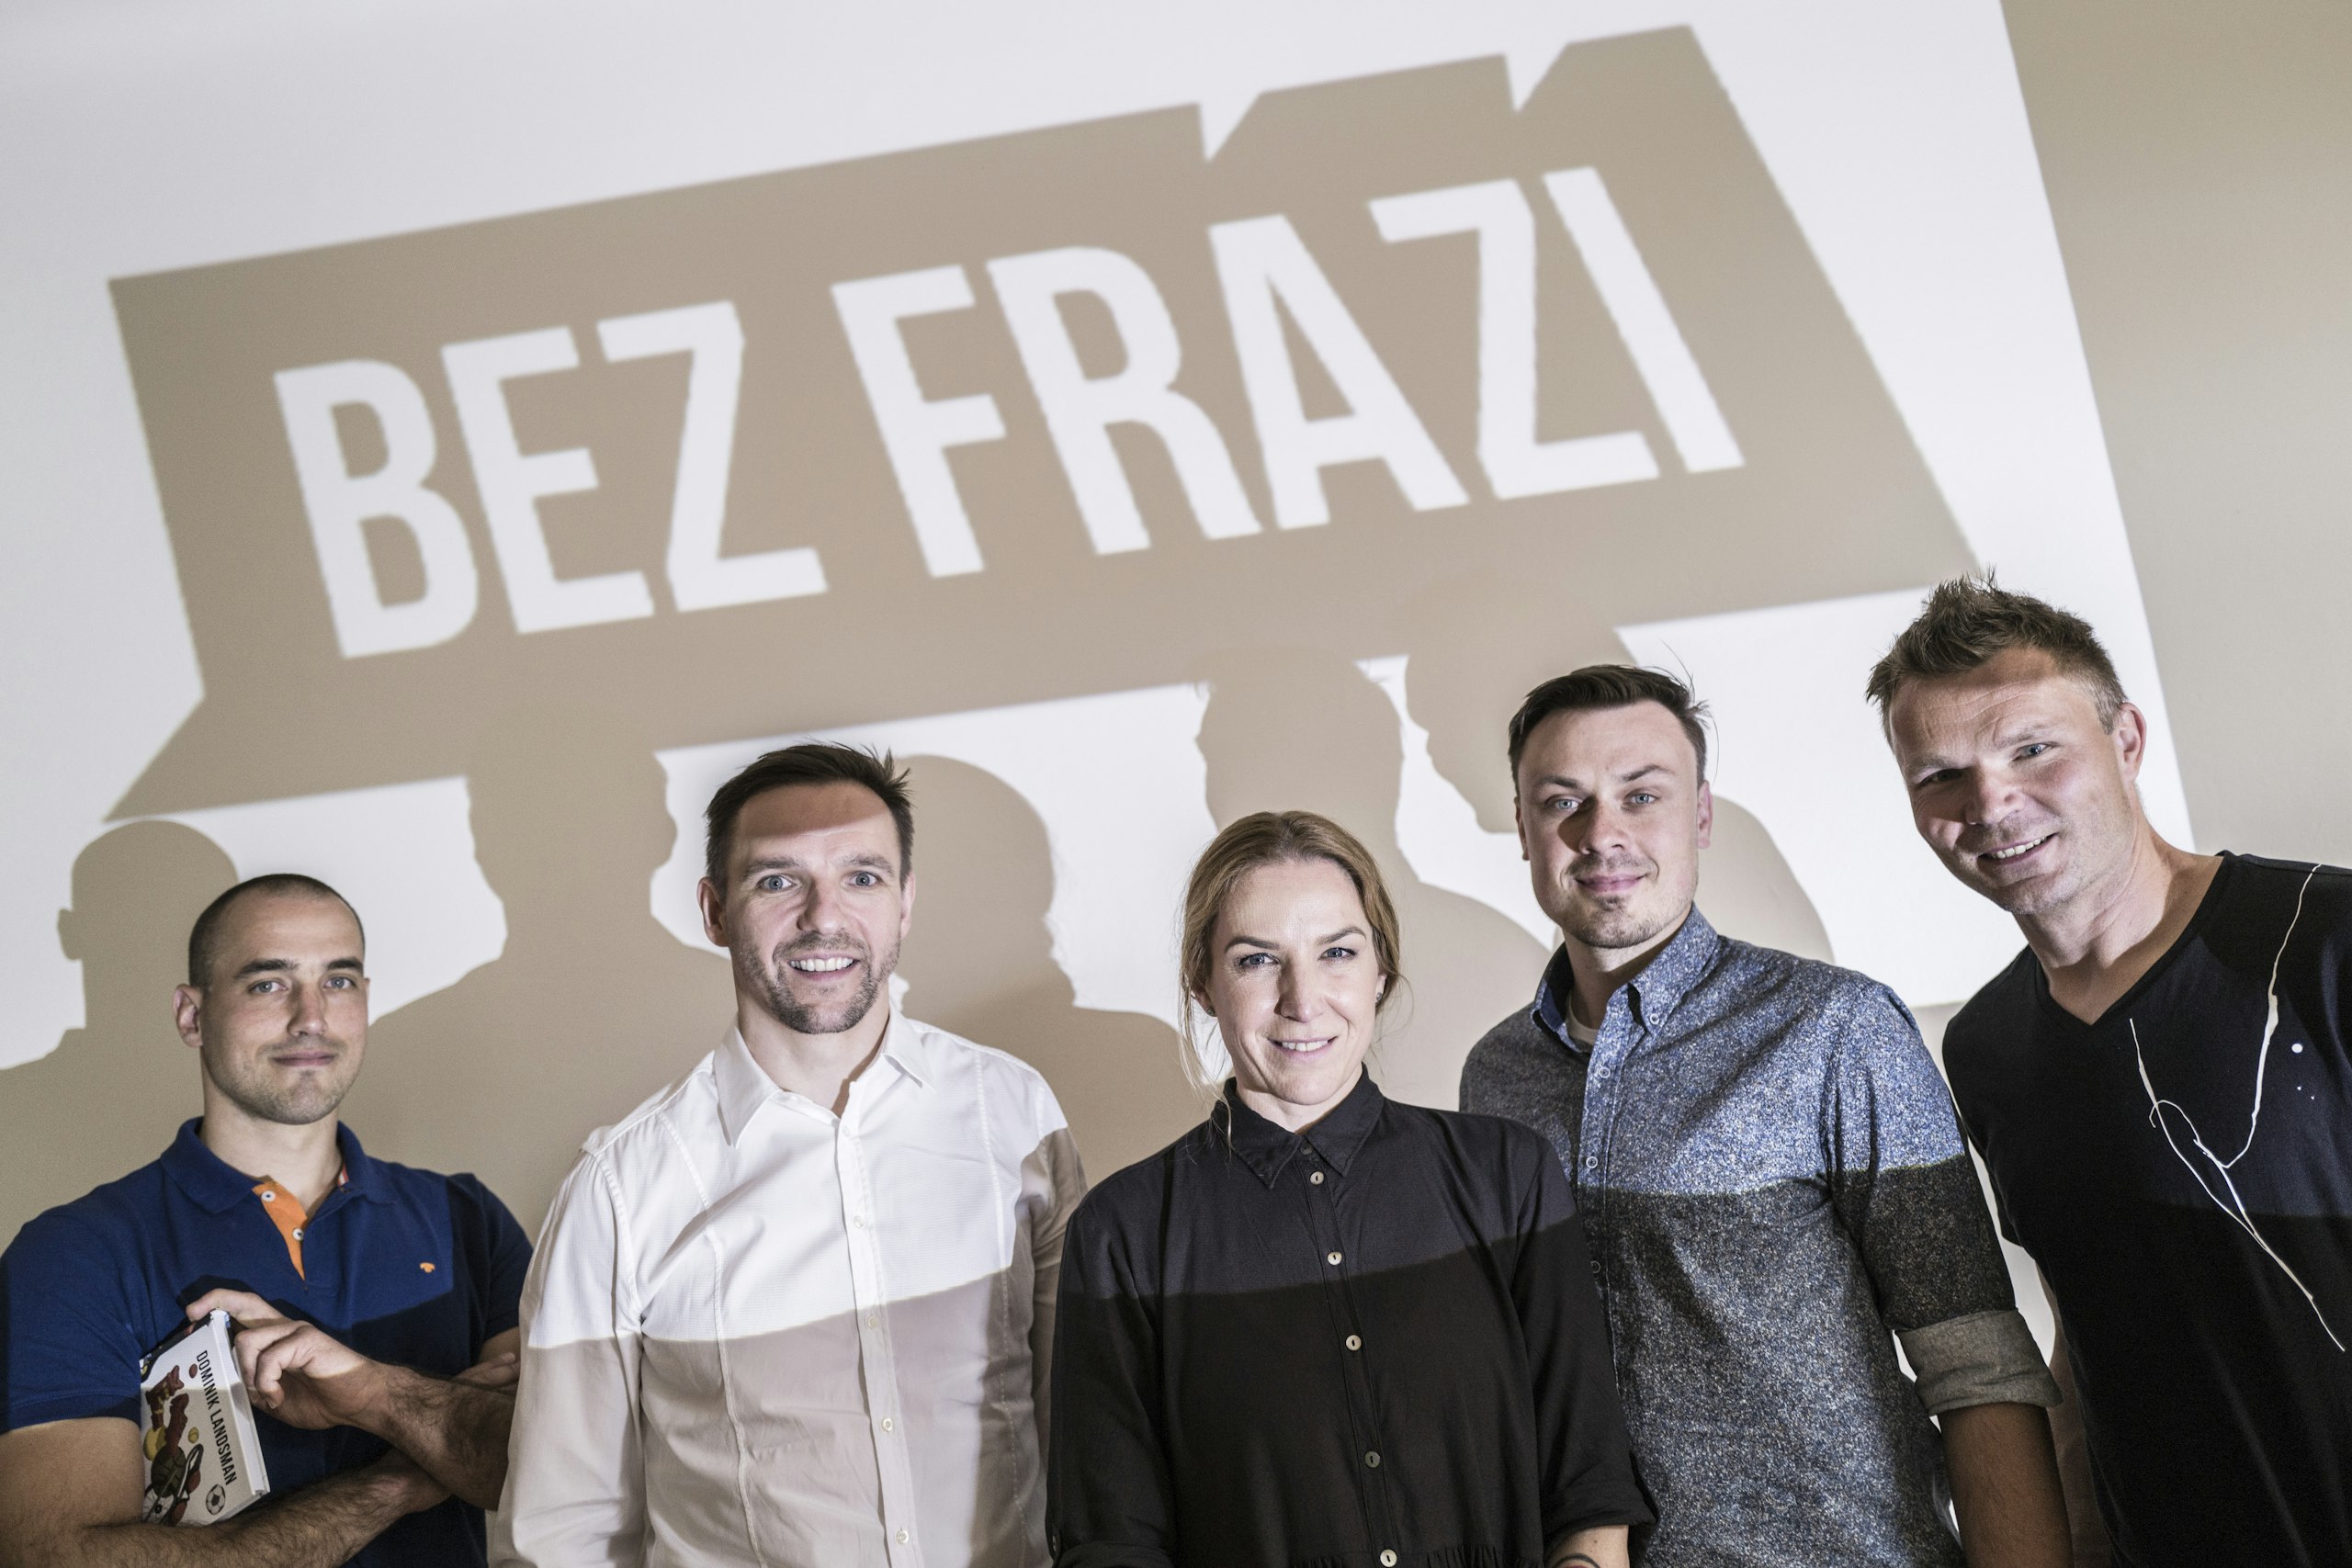 Hlavní osobnosti projektu Bez frází: František Prachař, Radim Vrbata, Jana Mansatorová, František Suchan a Karel Nocar